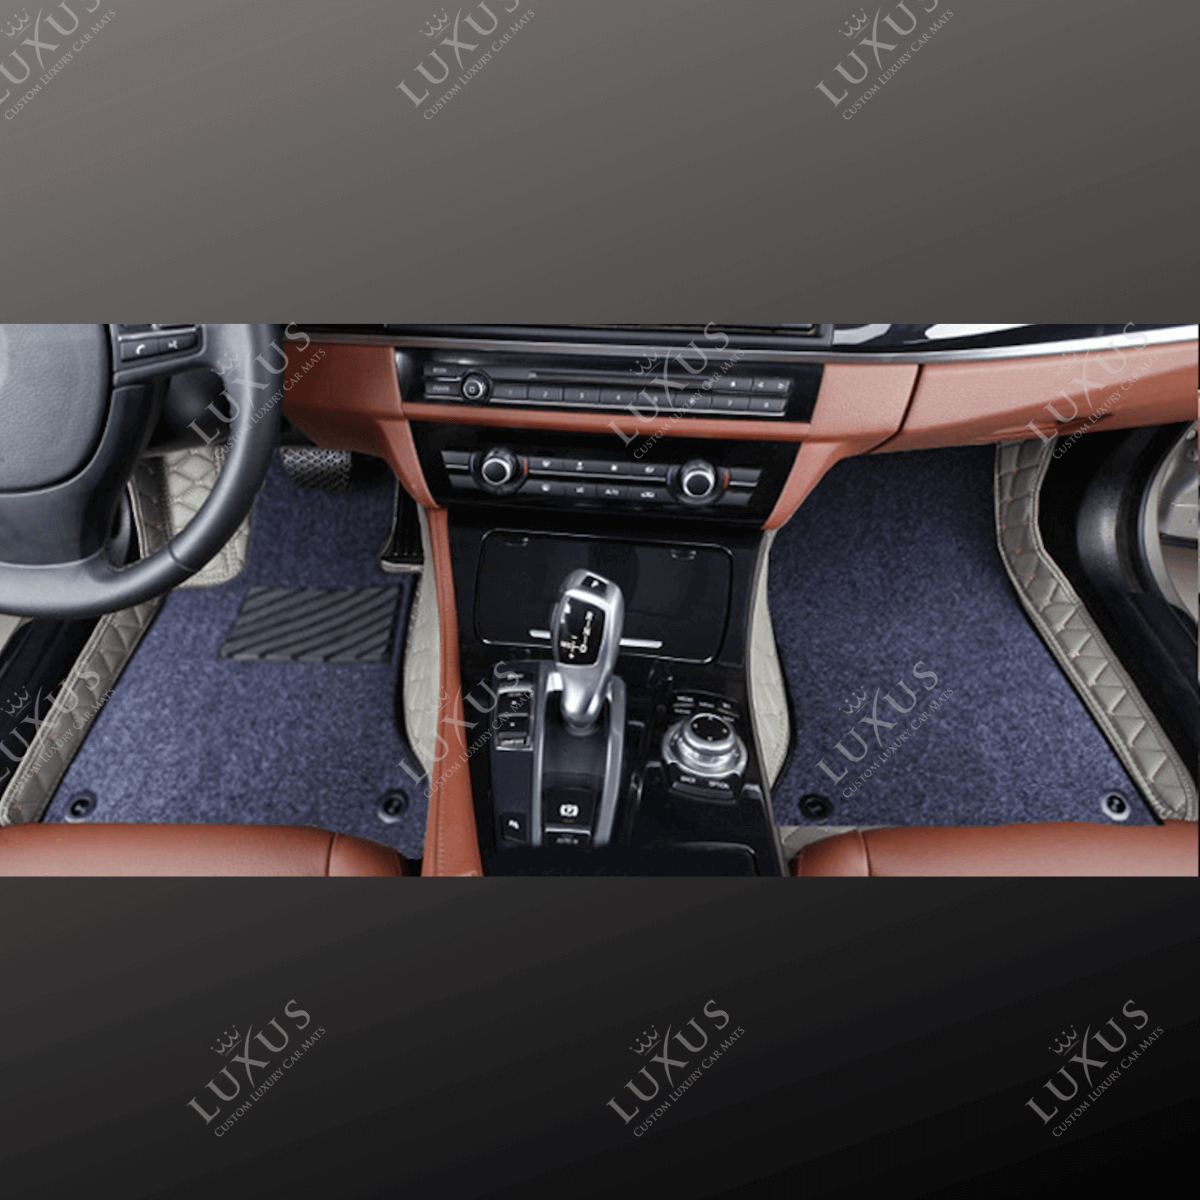 Luxus Car Mats™ - svart og blå søm Luksus bilmattesett